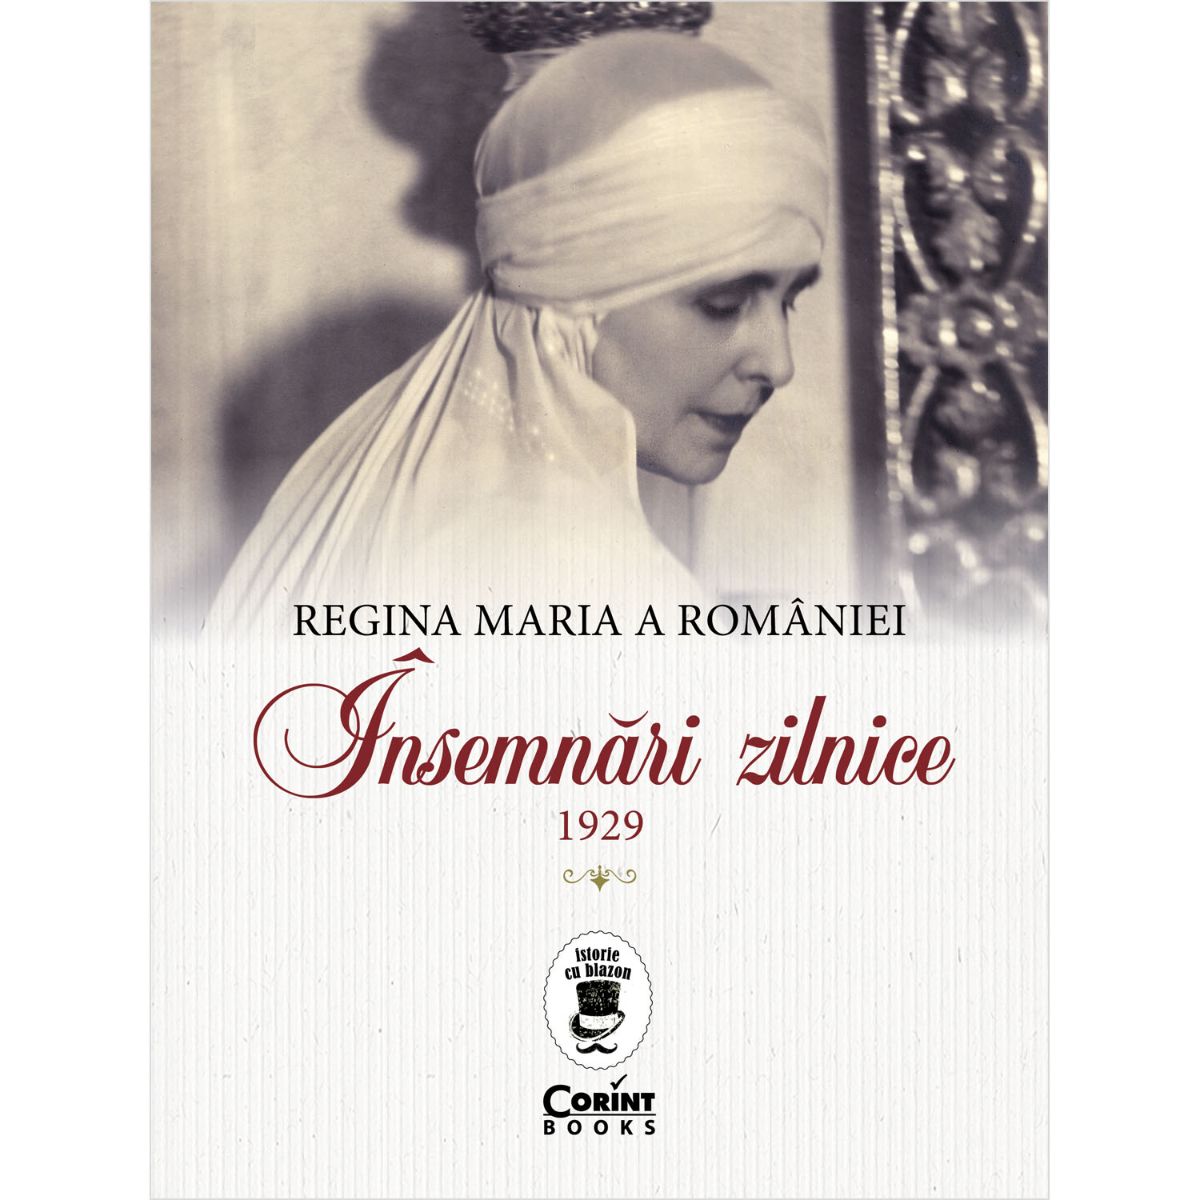 Regina Maria a Romaniei, Insemnari zilnice 1929